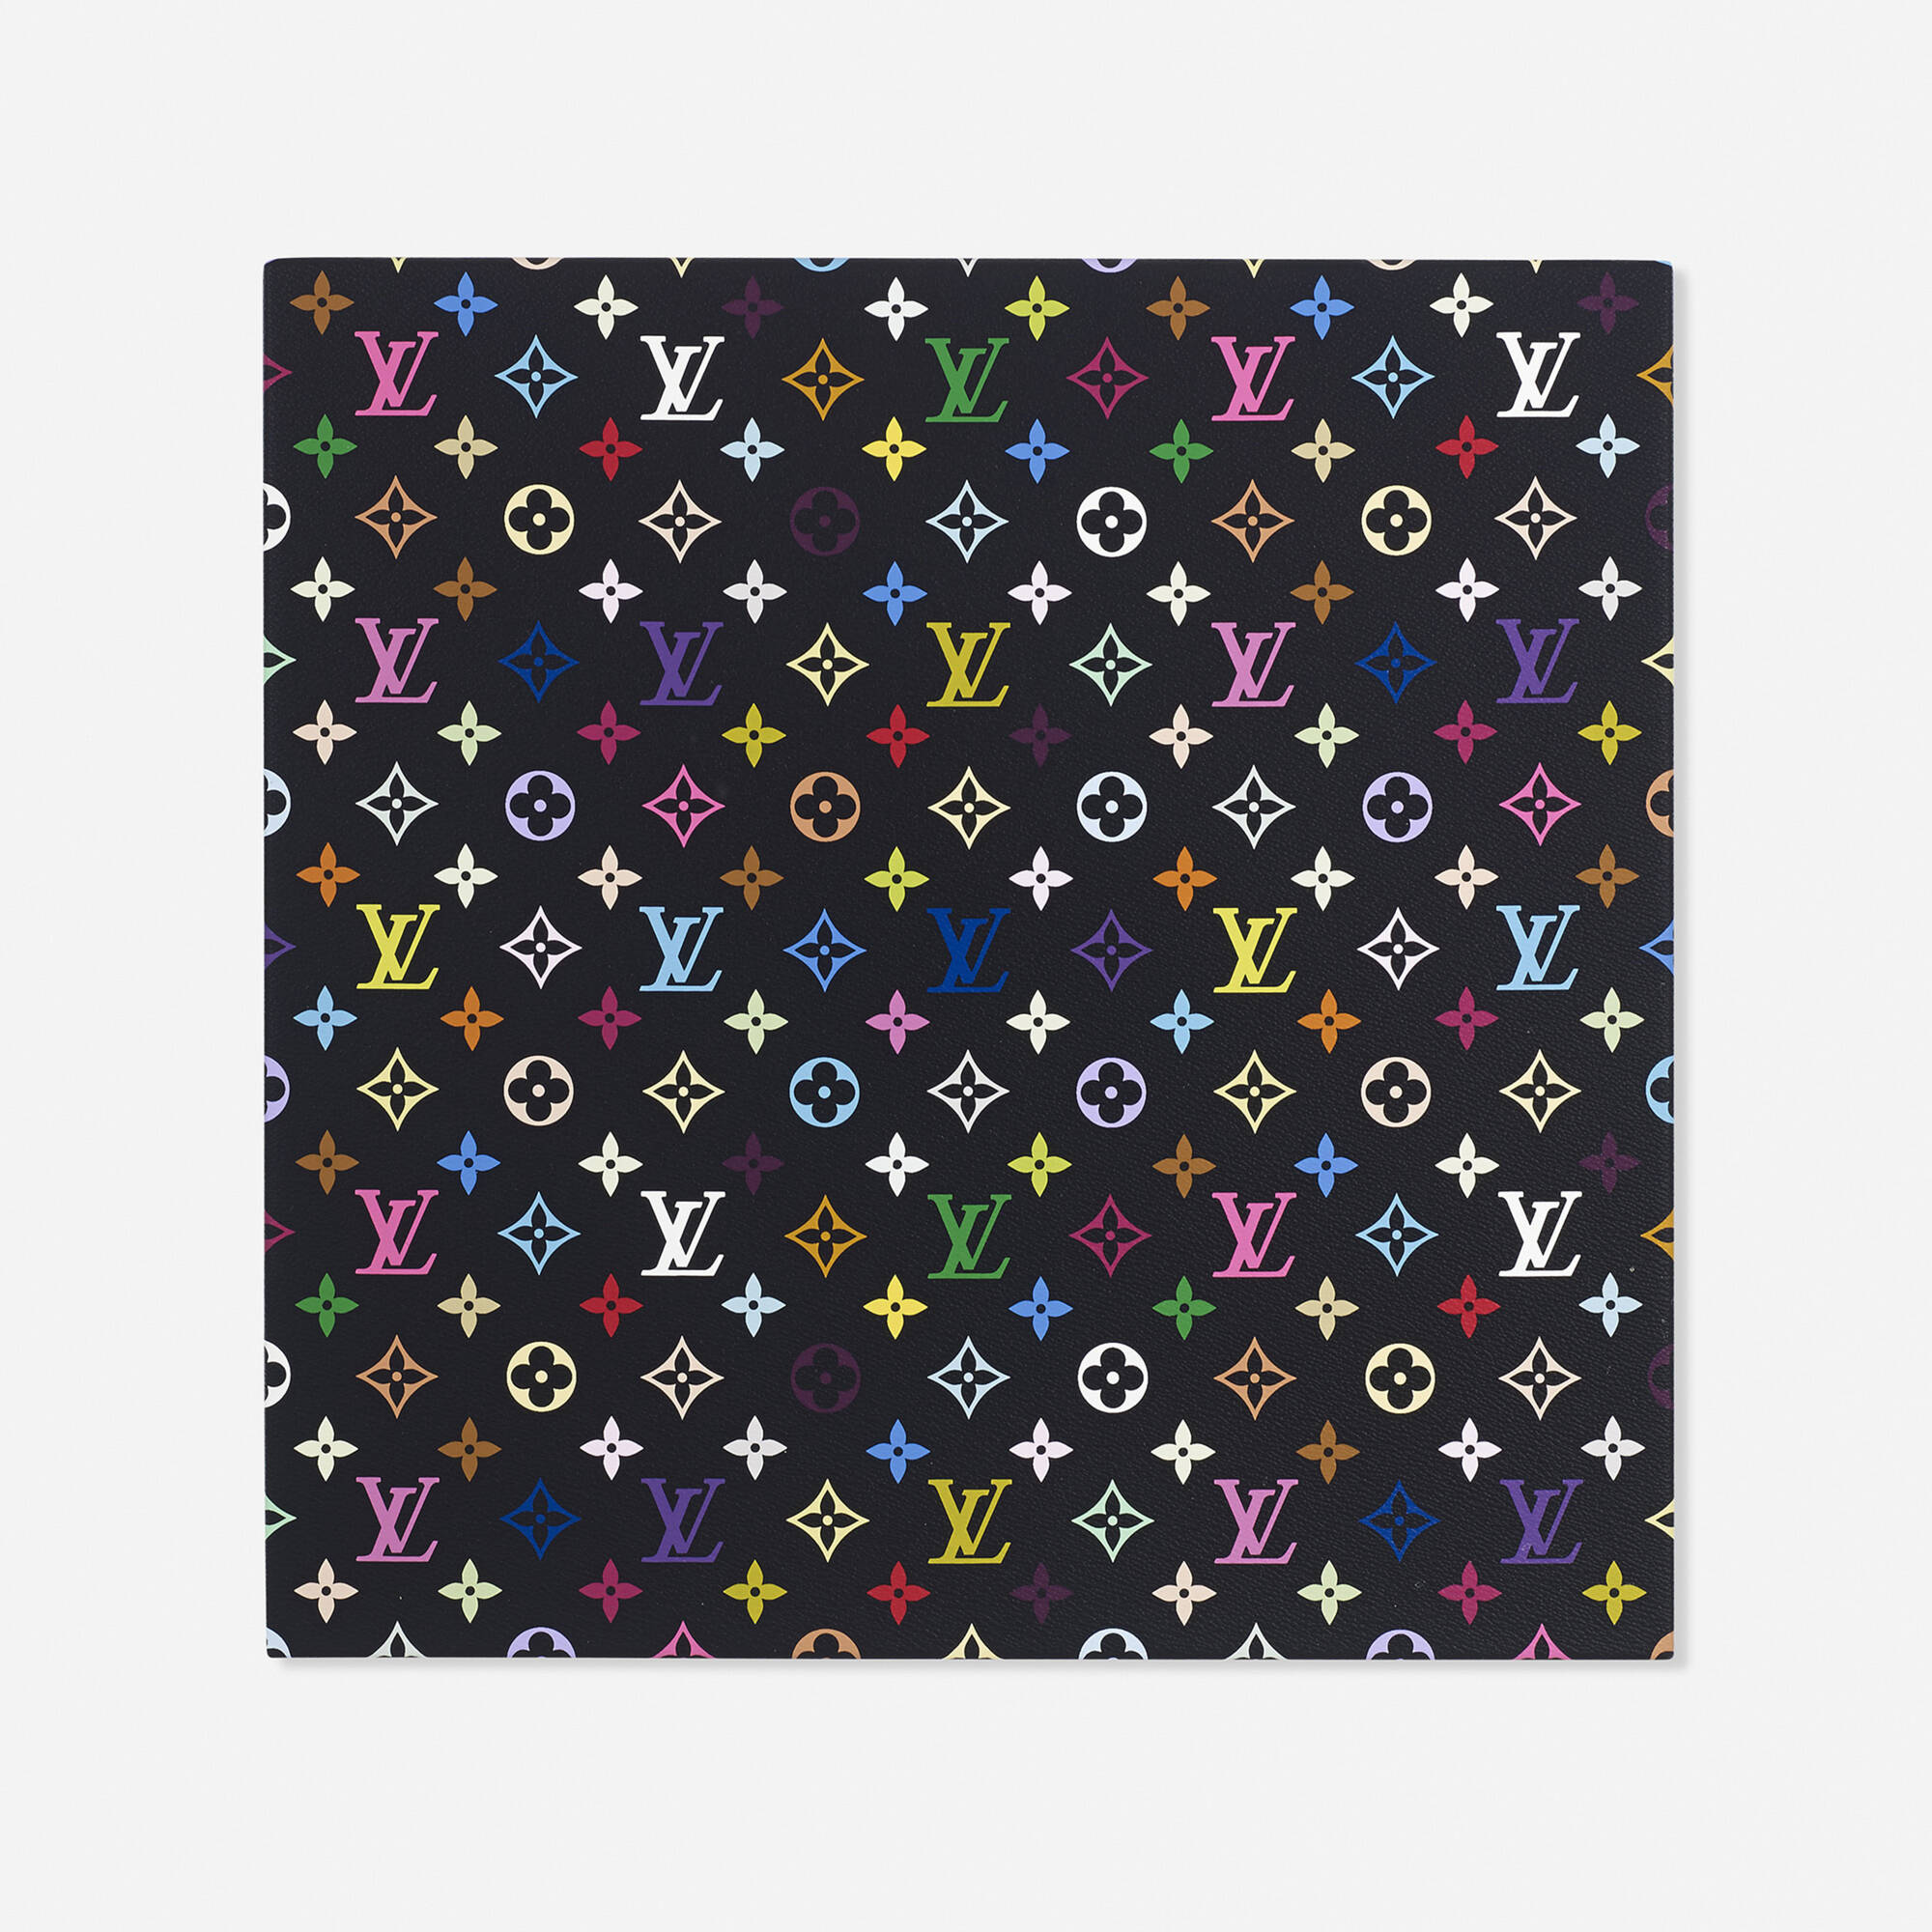 177: TAKASHI MURAKAMI AND LOUIS VUITTON, Monogram Multicolore - black